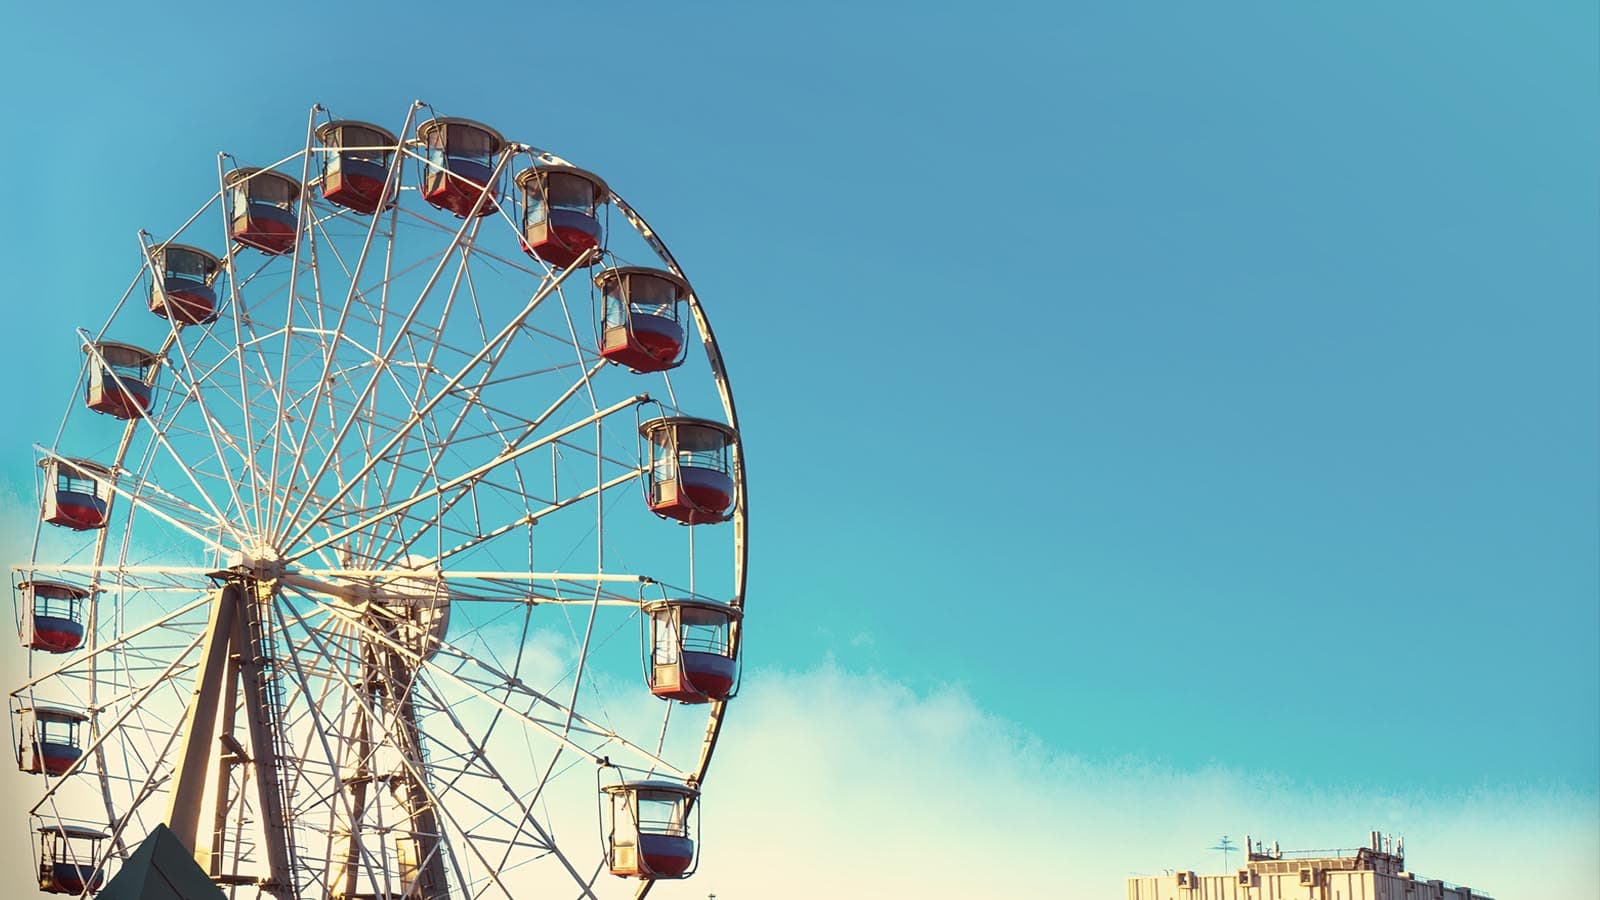 Ferris Wheel and blue sky